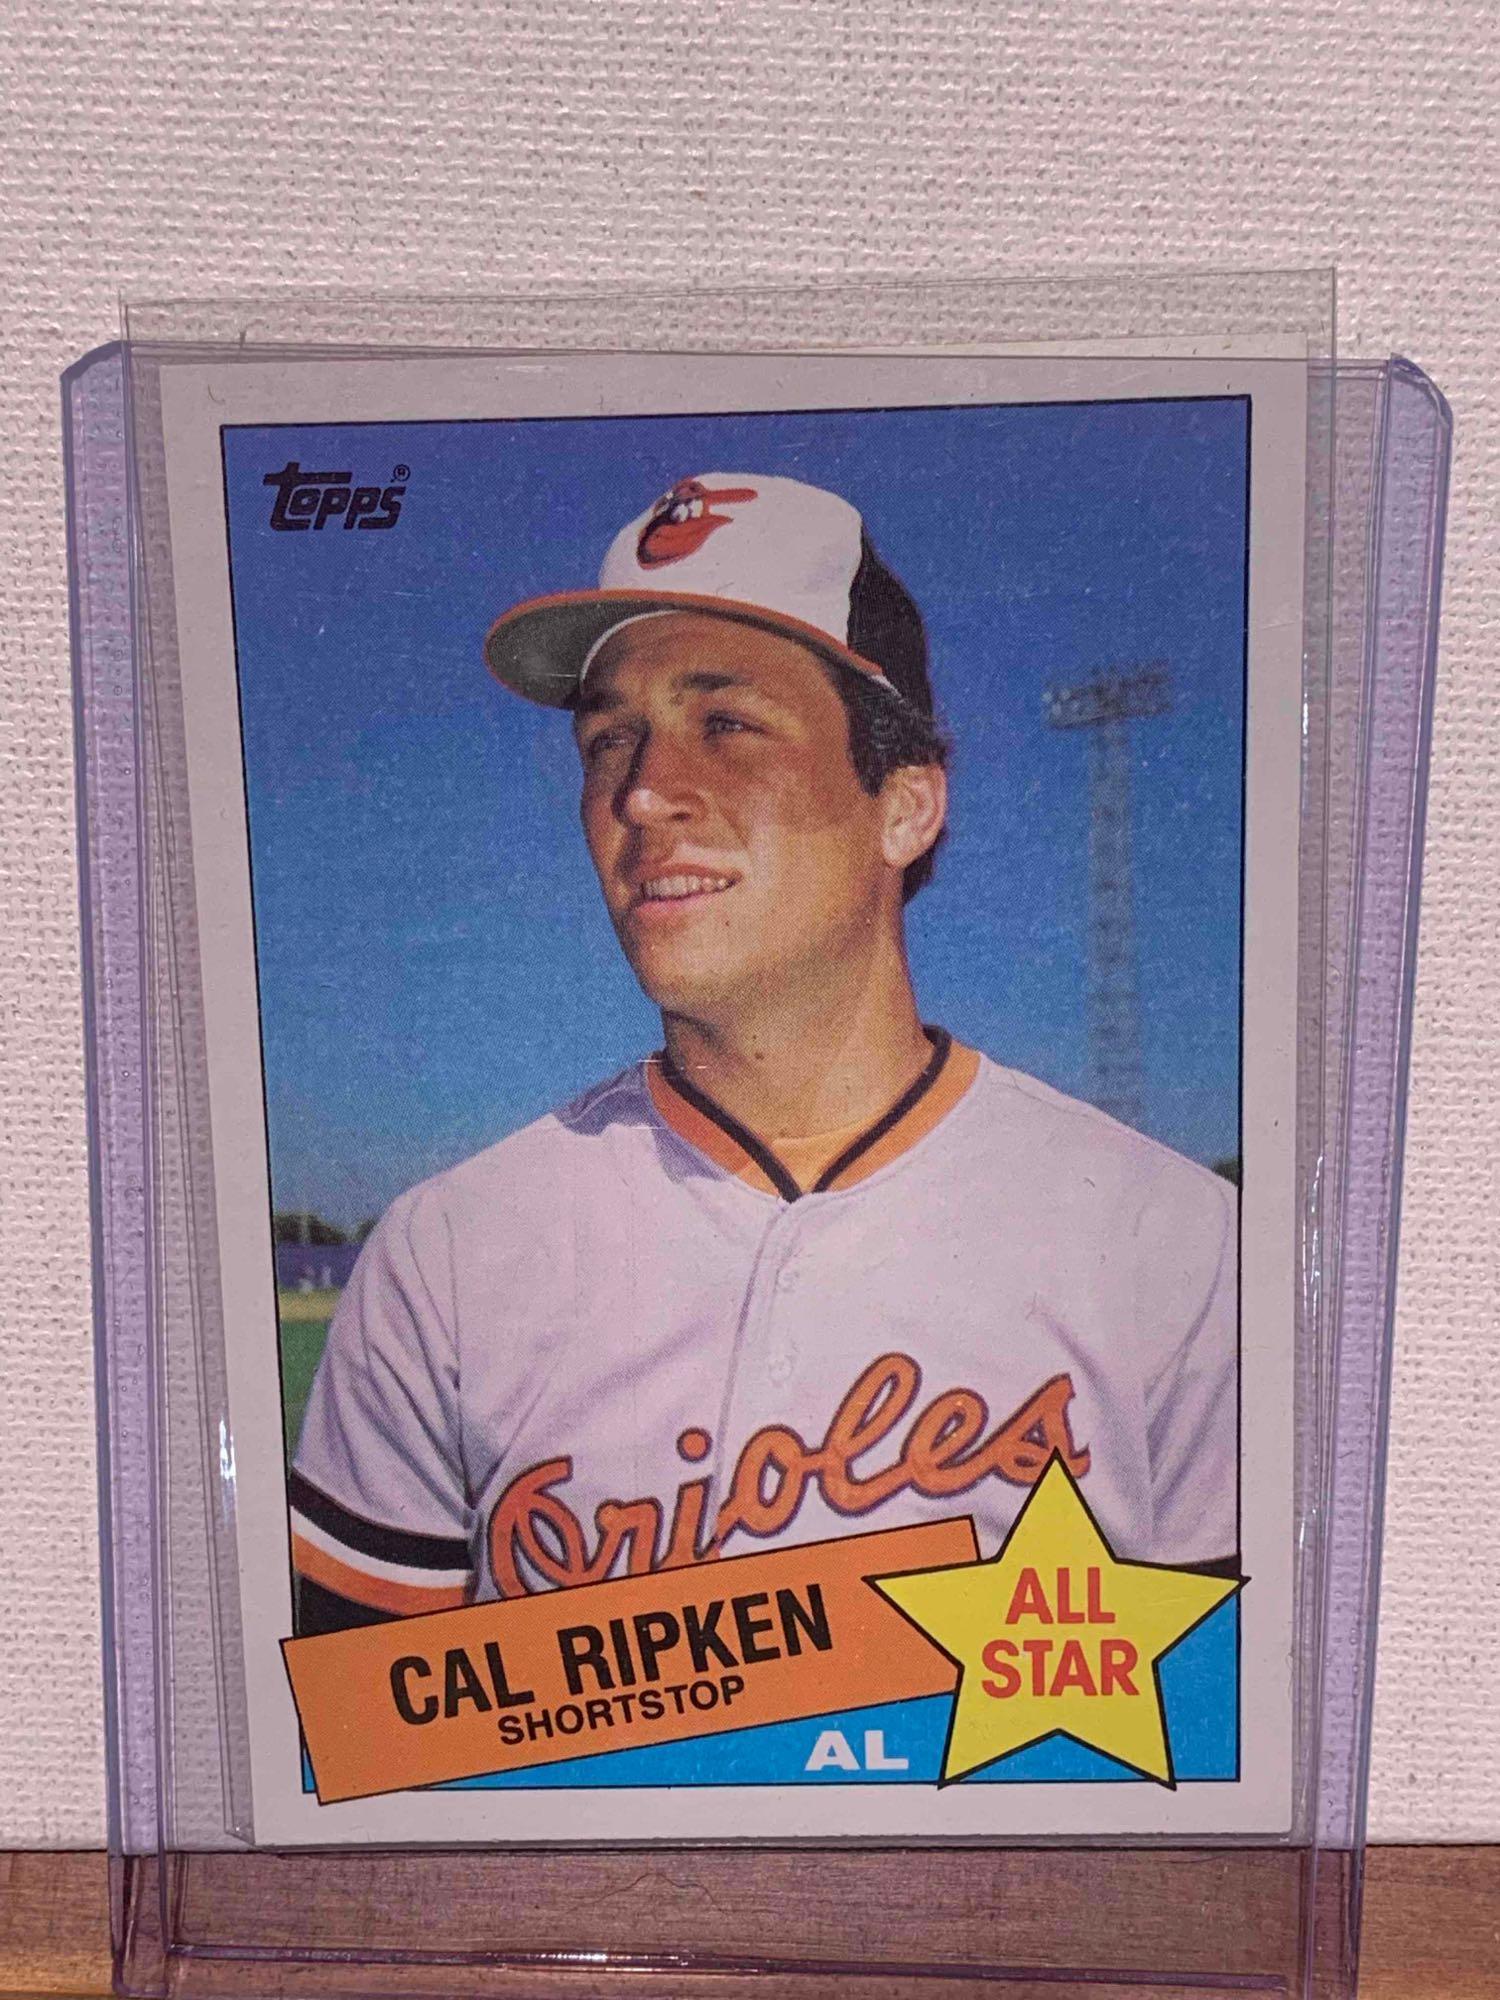 1983 Topps Robin Yount all star baseball card